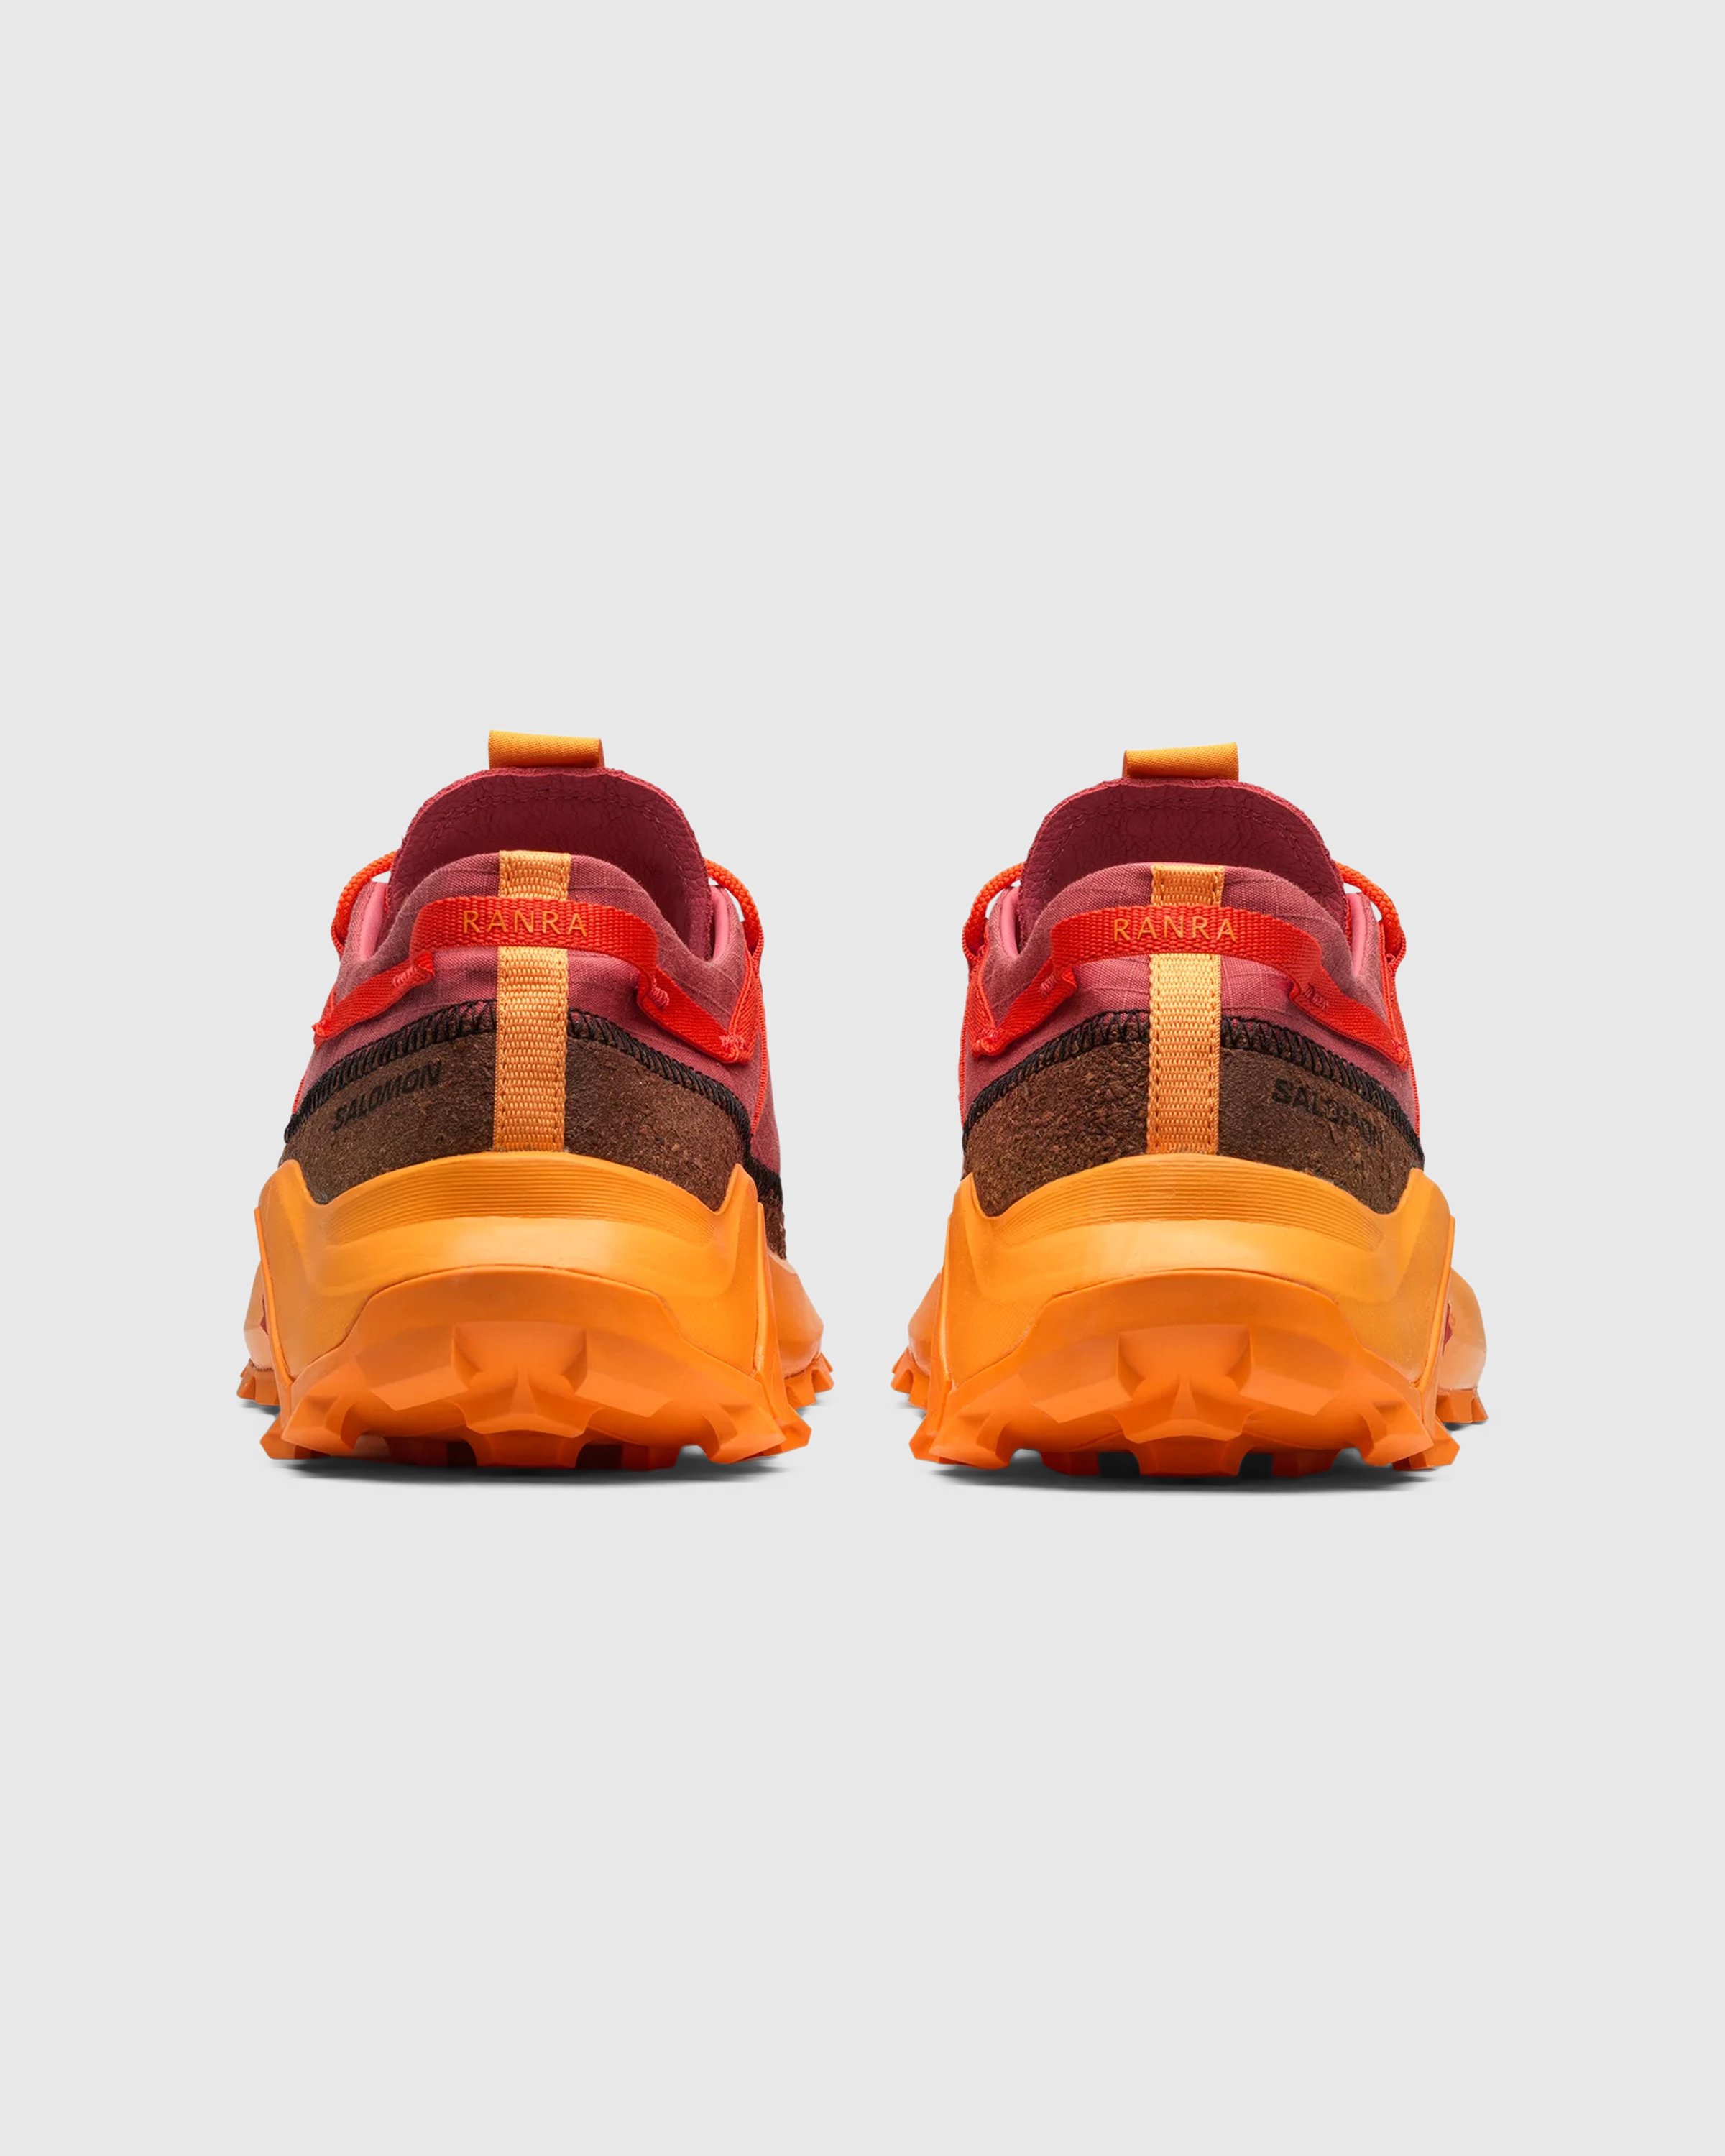 RANRA x Salomon - CROSS PRO BETTER RUBIA - Footwear - Orange - Image 4